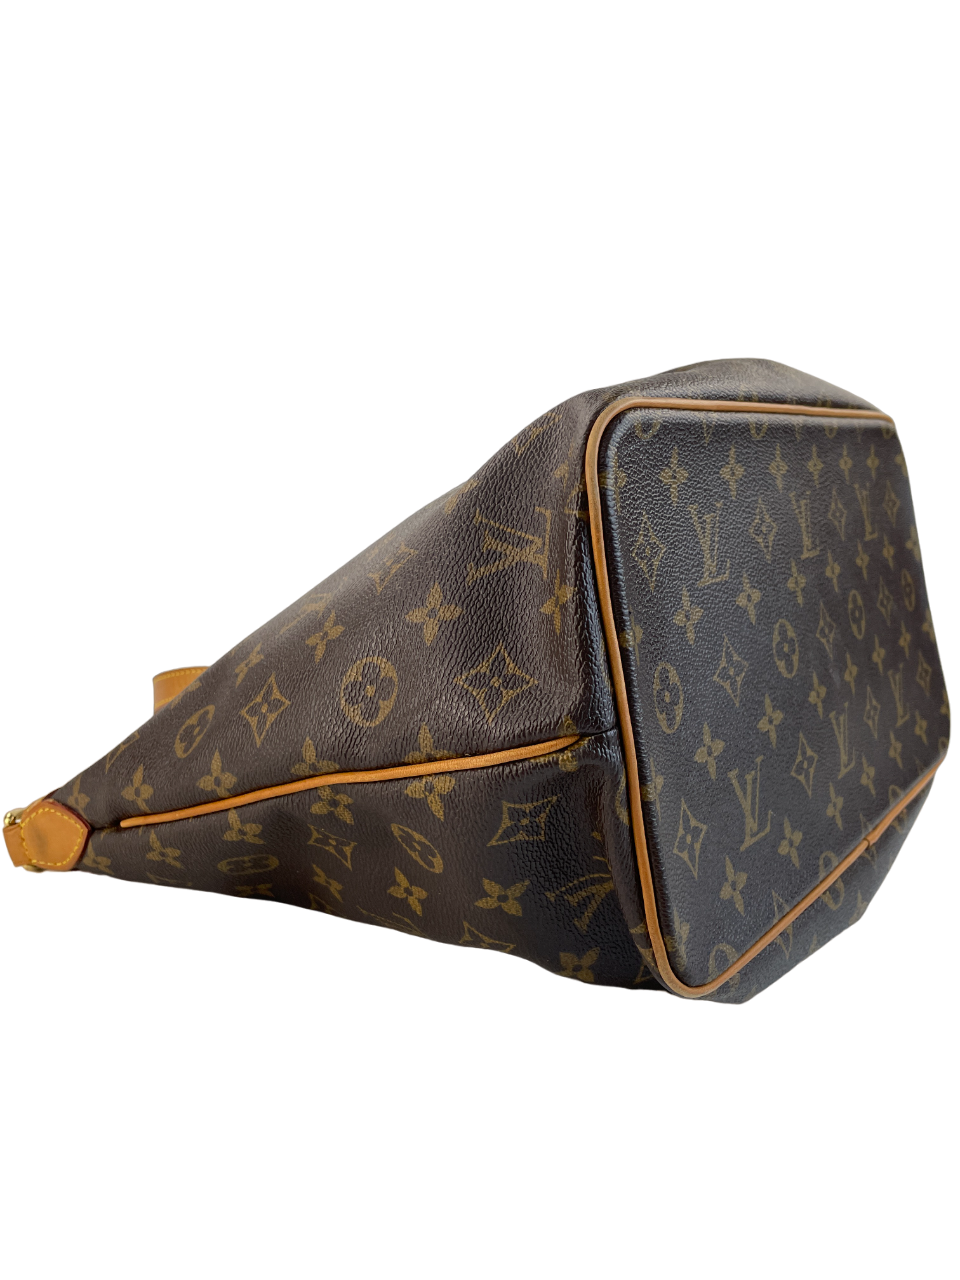 Preloved Louis Vuitton Palermo PM Bag SD0069 092523